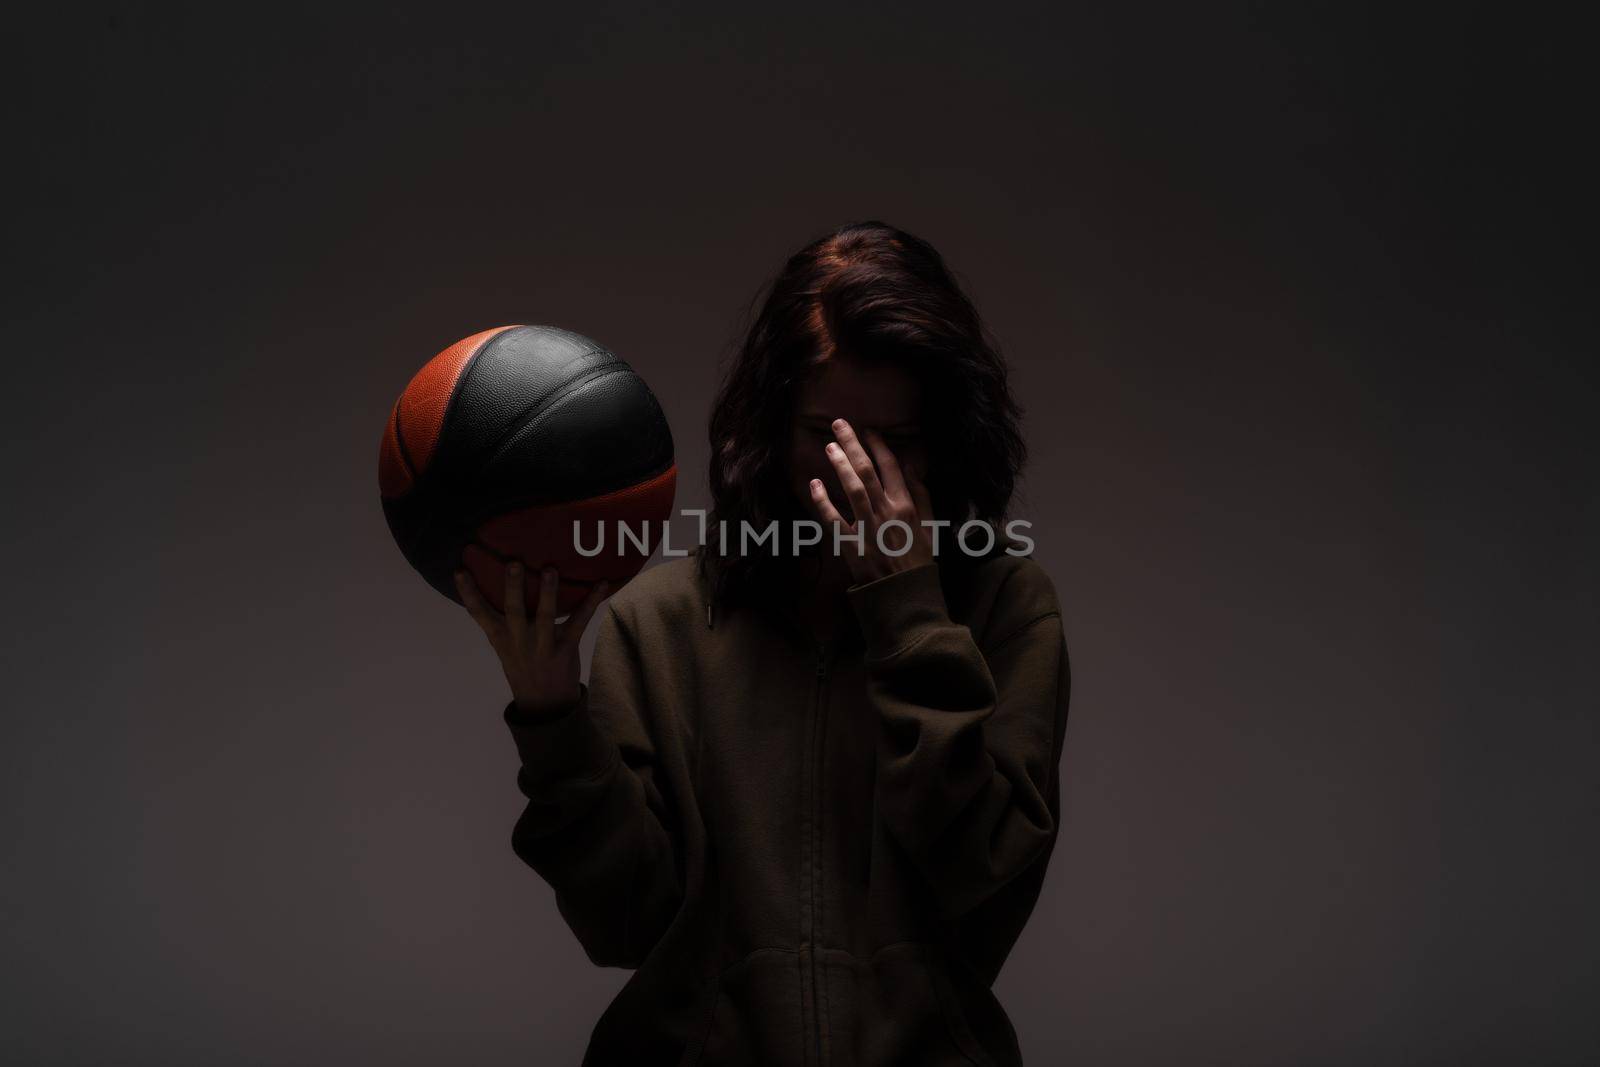 Teenage girl with basketball. Silhouette studio portrait on dark background.